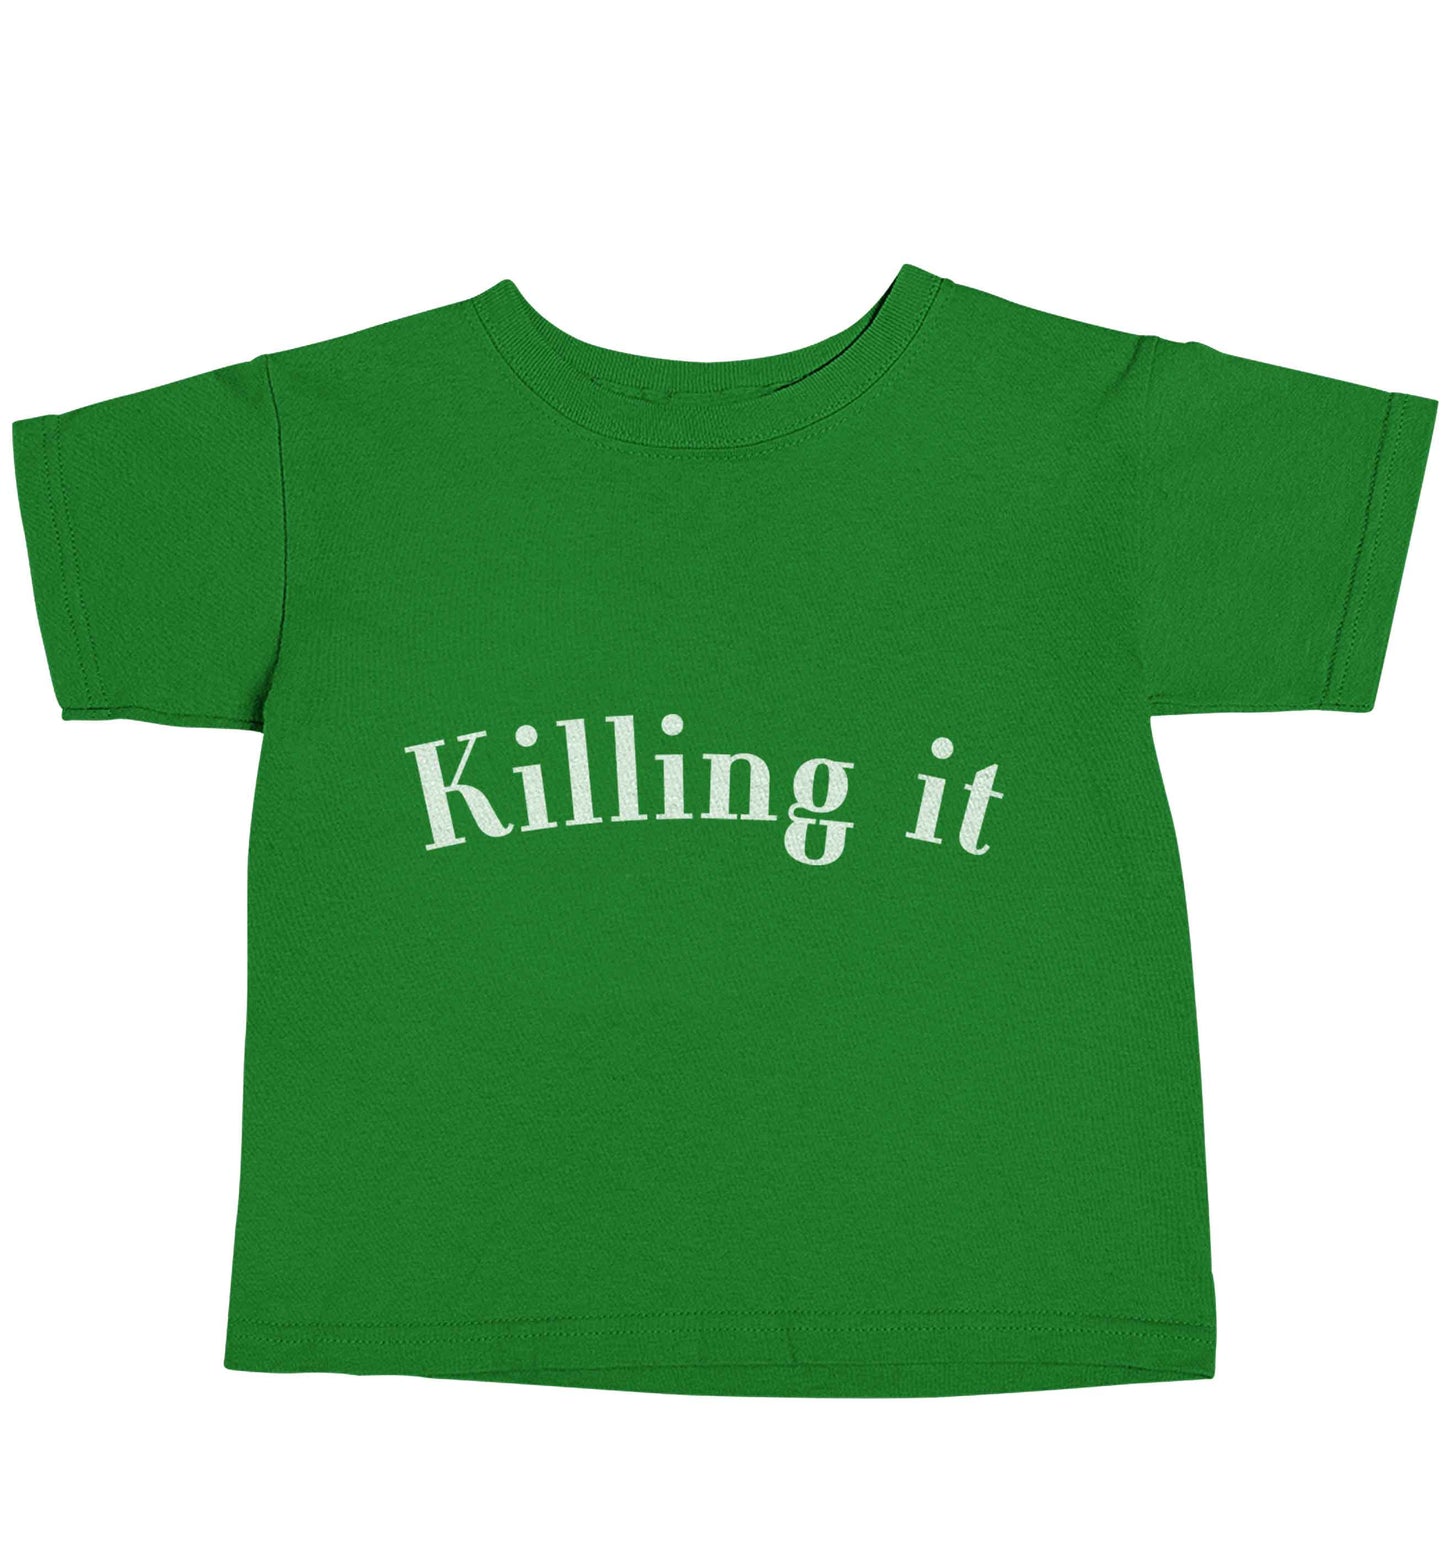 Killing it green baby toddler Tshirt 2 Years